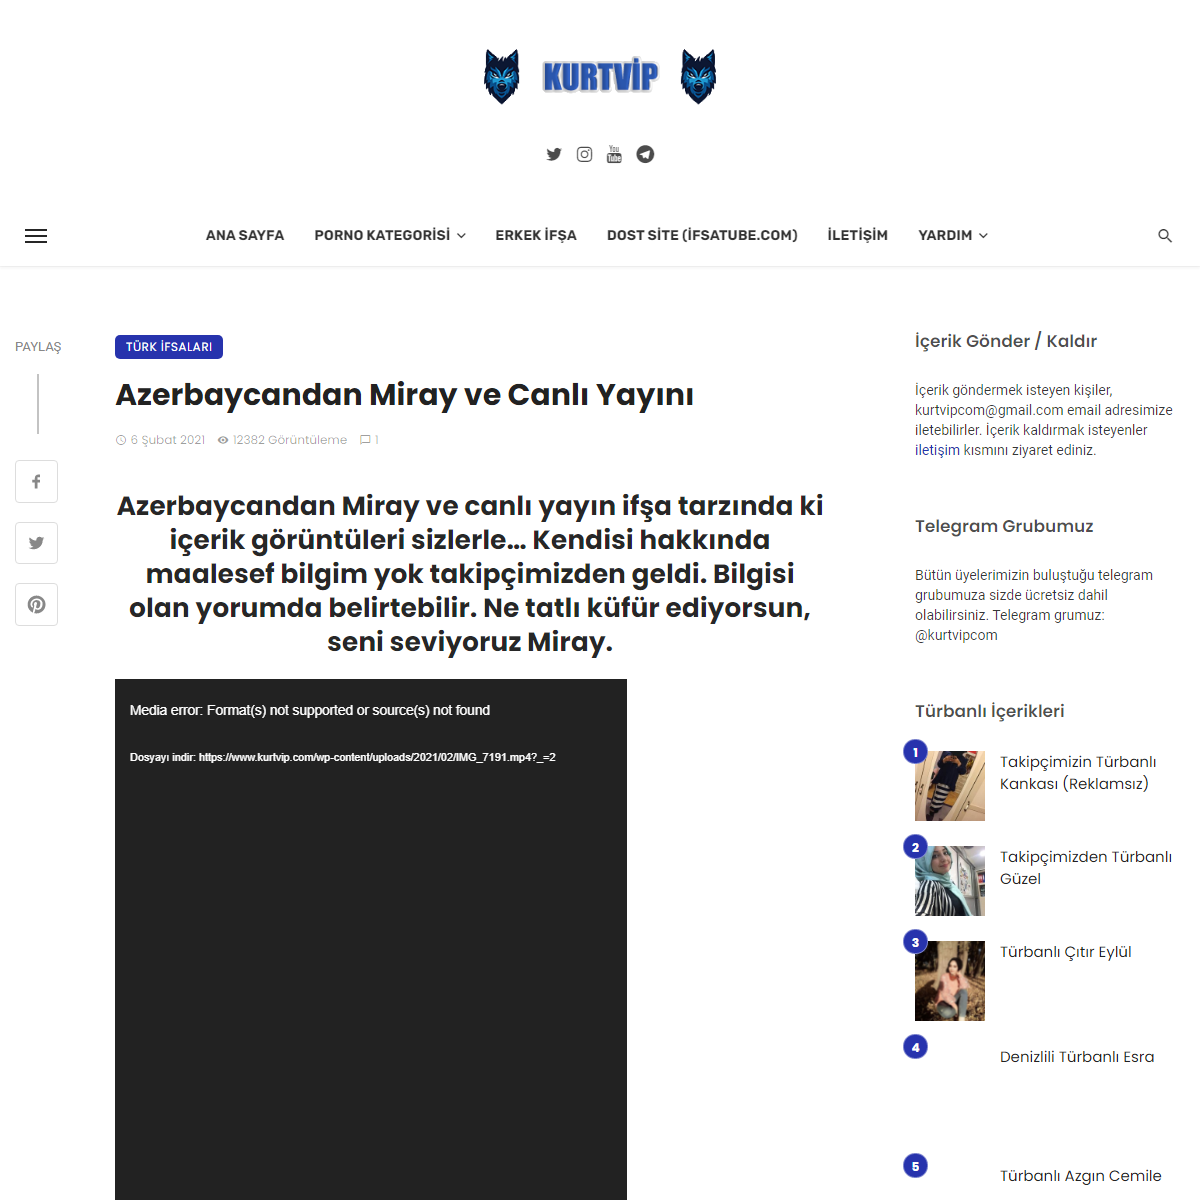 A complete backup of https://www.kurtvip.com/azerbaycandan-miray-ve-canli-yayini/